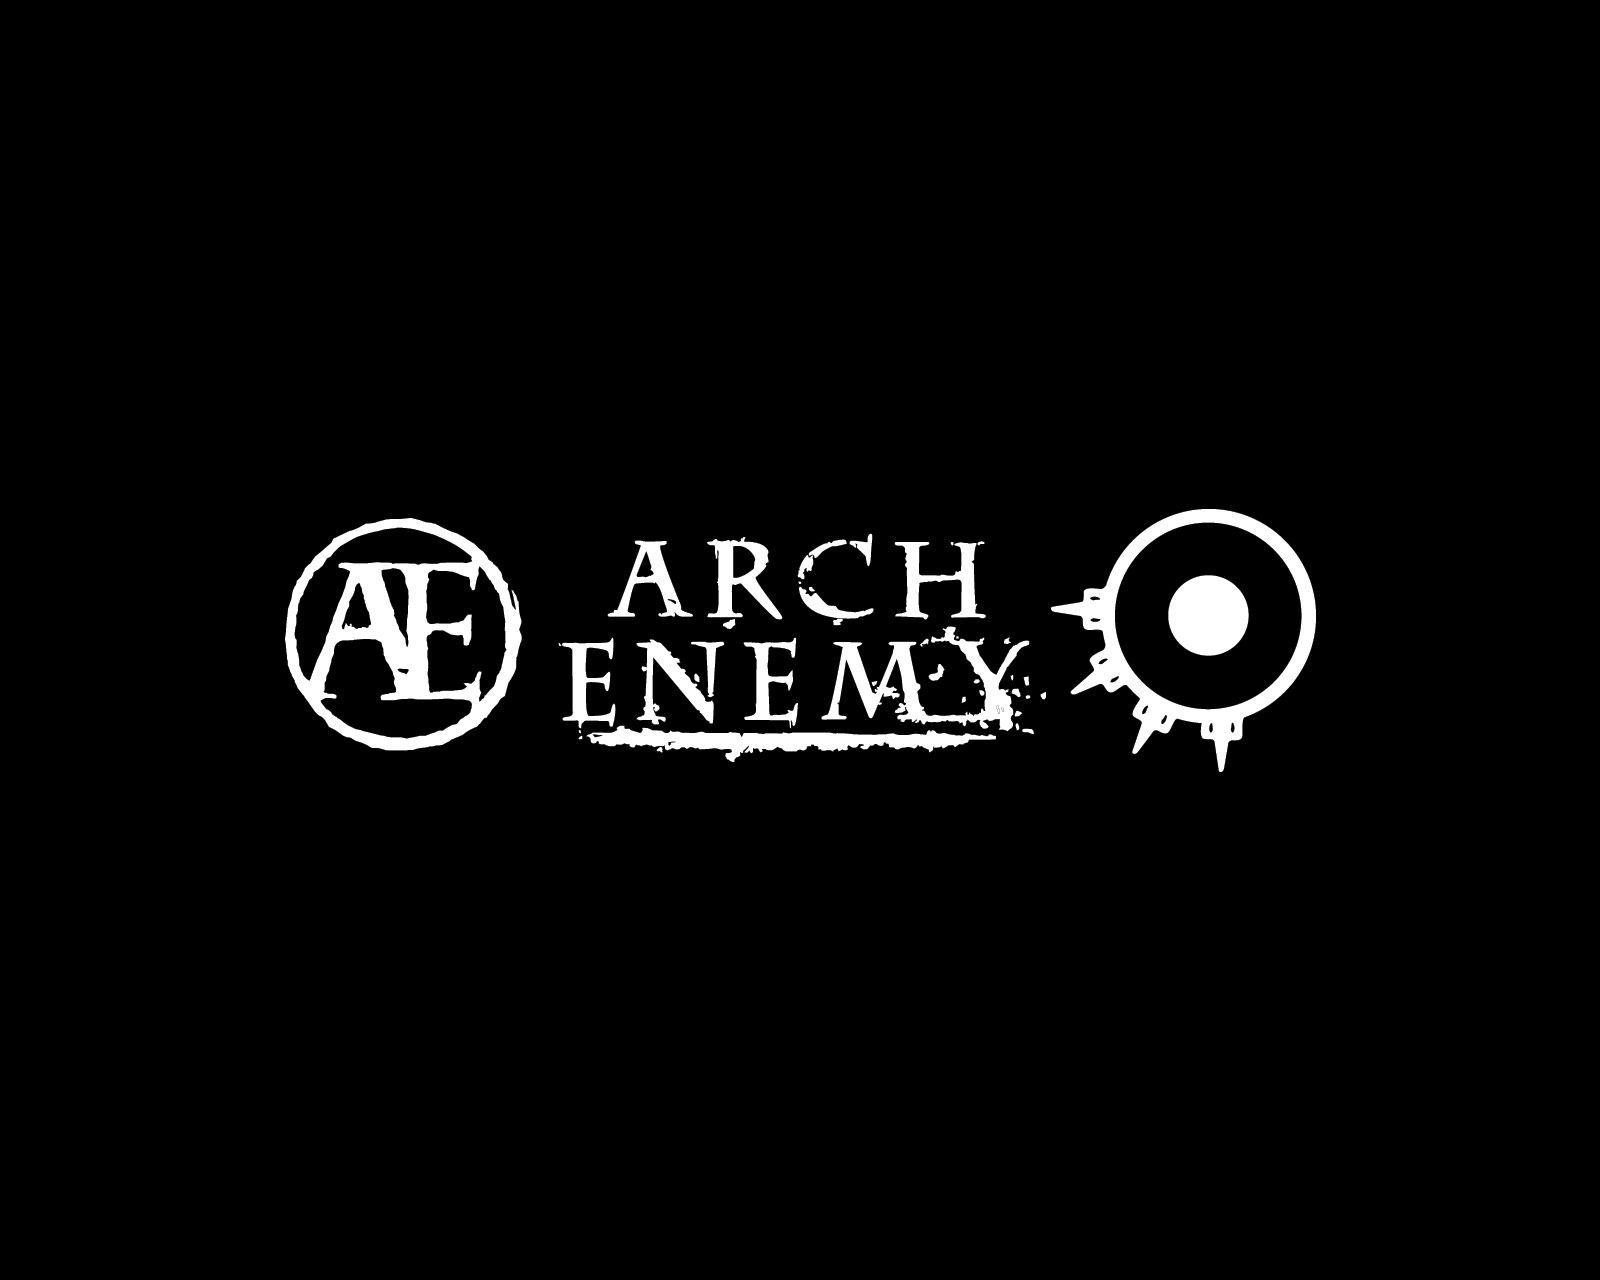 Arch Enemy Logo - Arch Enemy logo and wallpaper. Band logos band logos. Menn